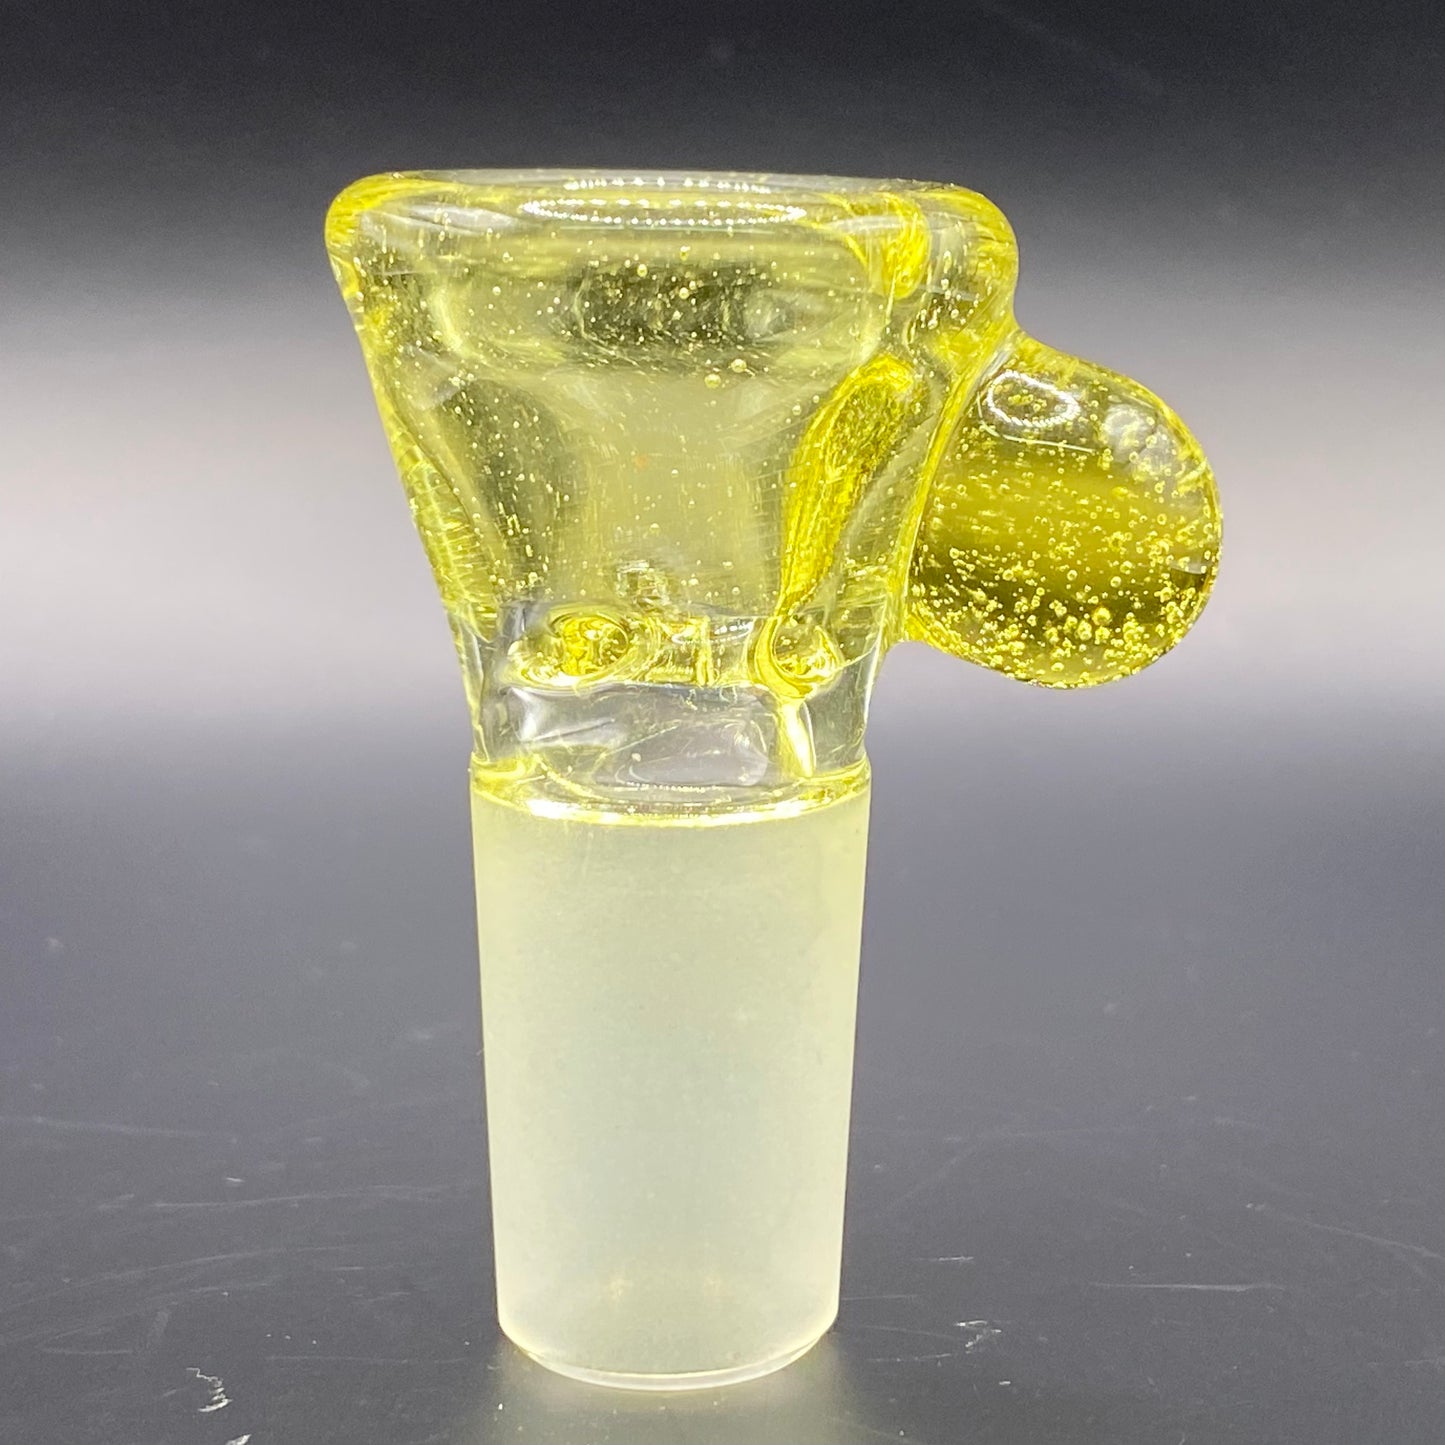 Brian Sheridan - 18mm 3-Hole Glass Bowl Slide - Syzygy CFL